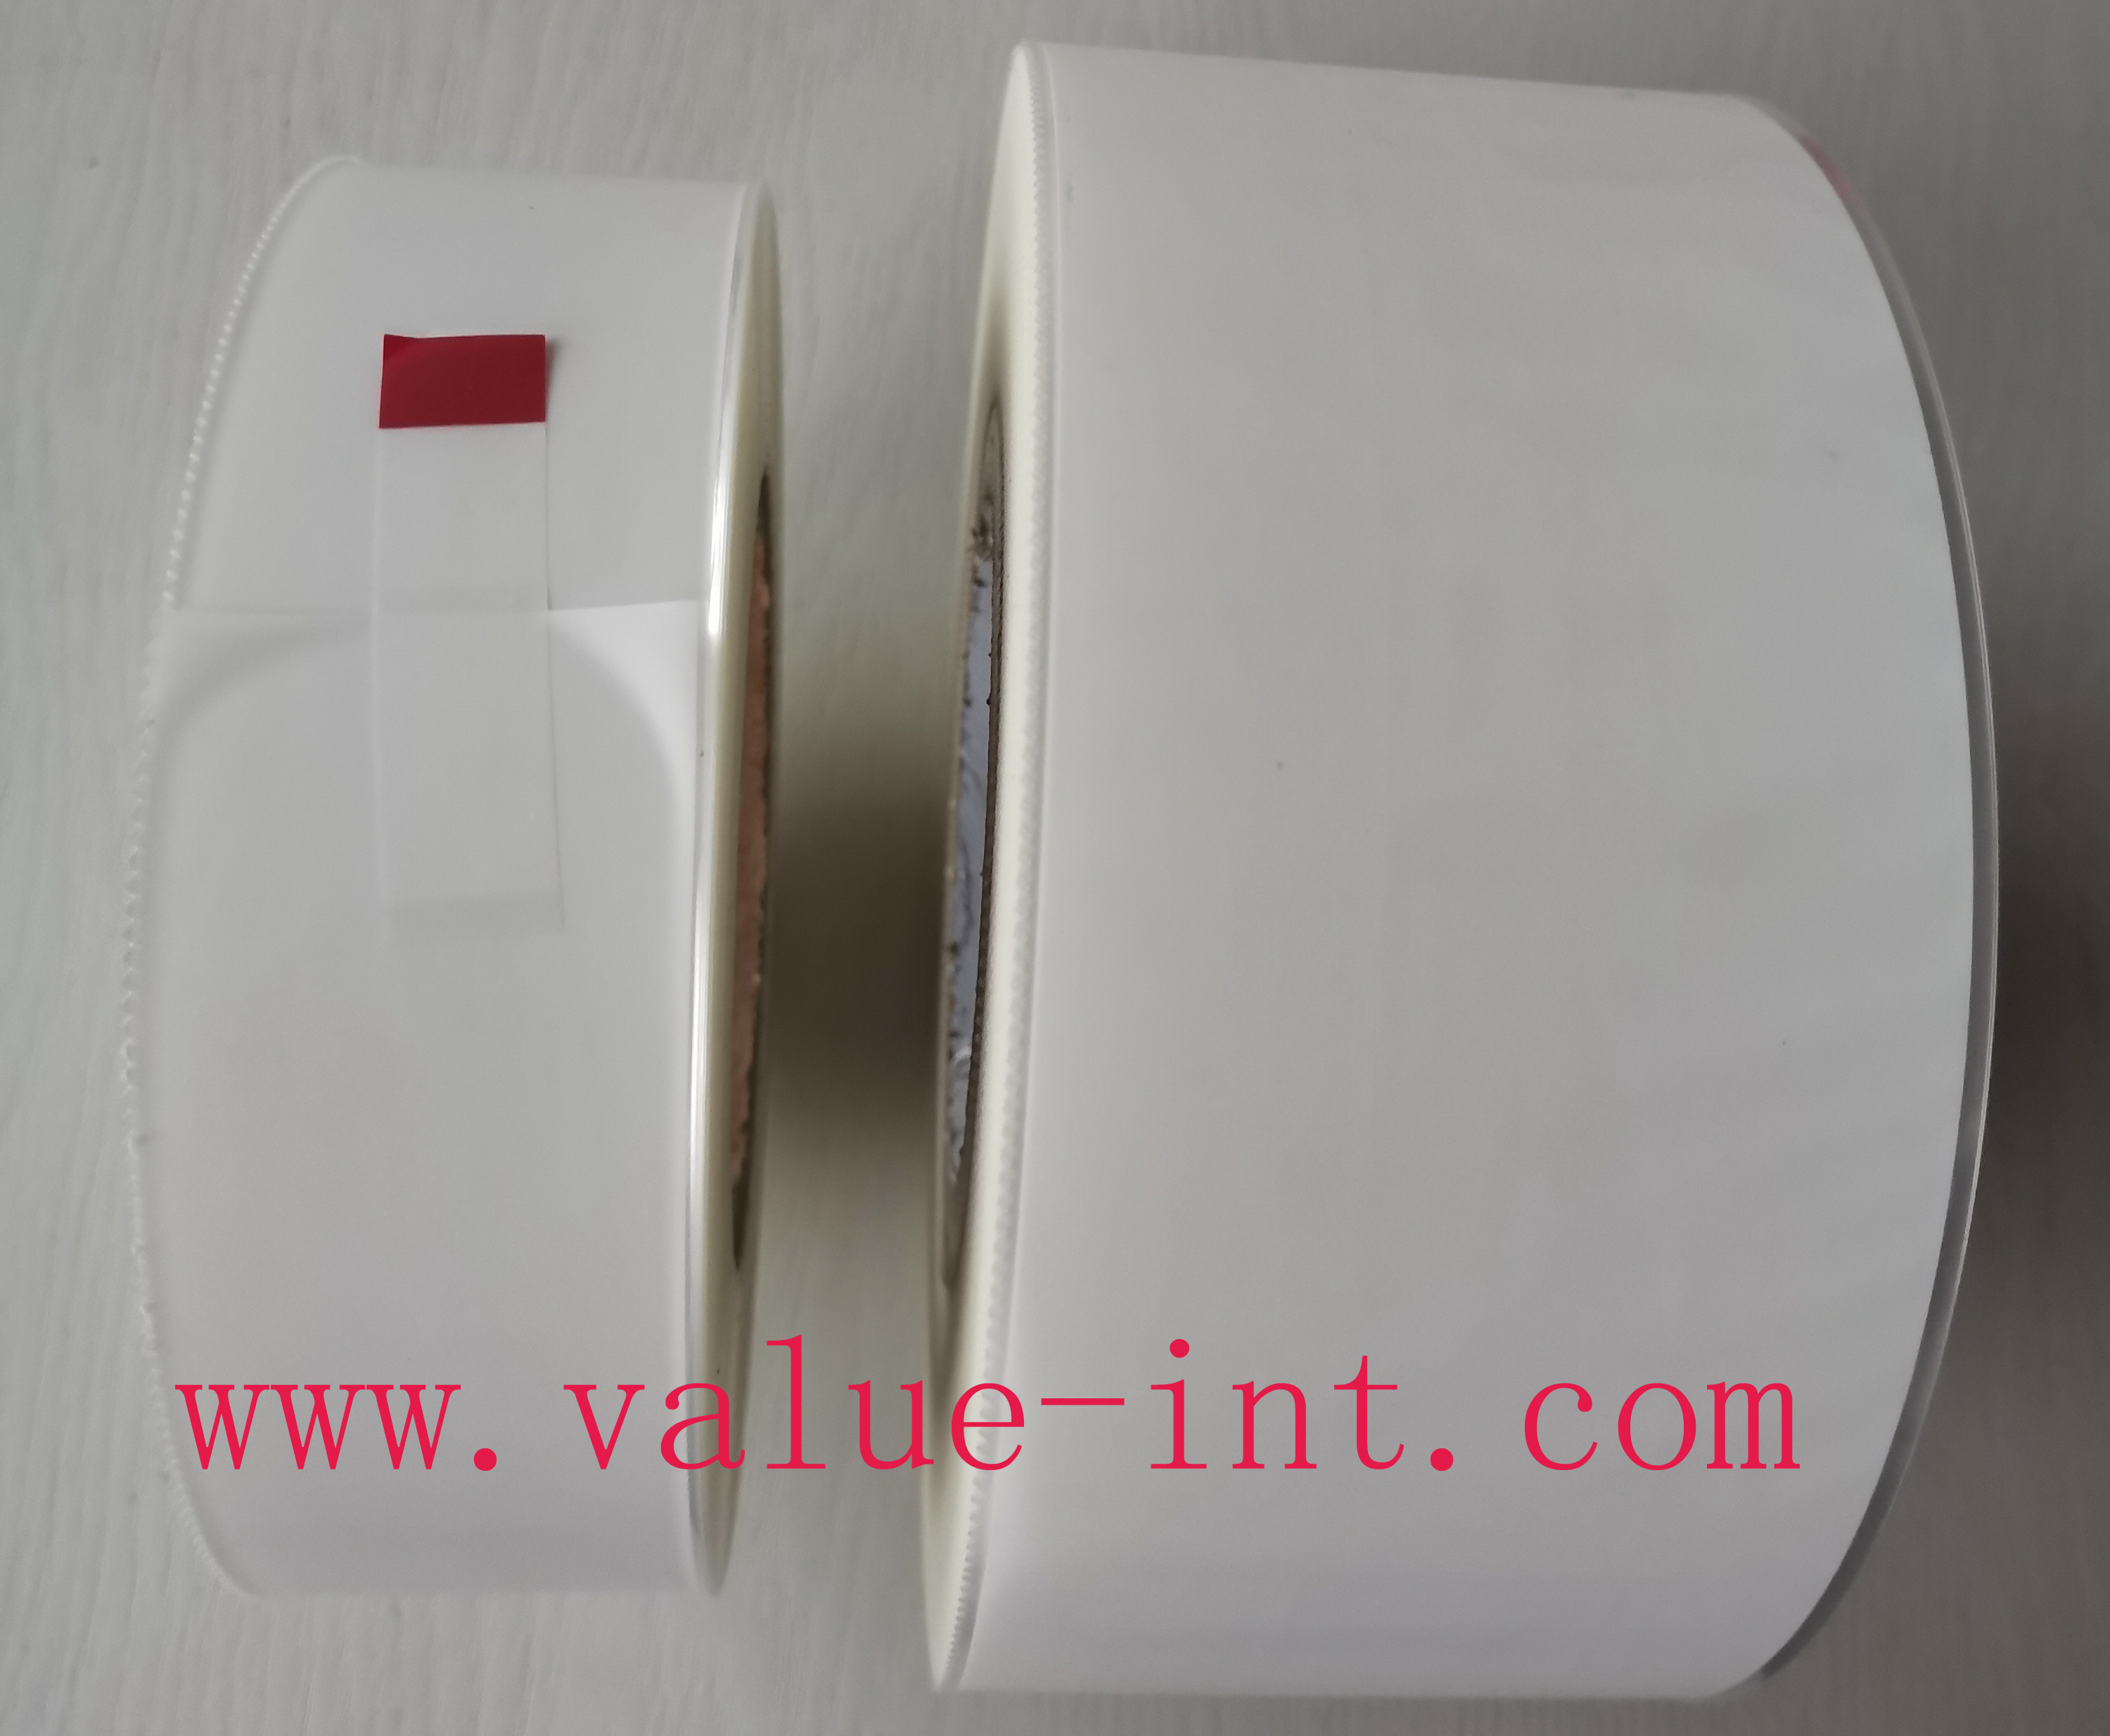 Packing paper for automatic Medication dispensing machine (Sanyo/TCGRx/AmerisourceBergen)